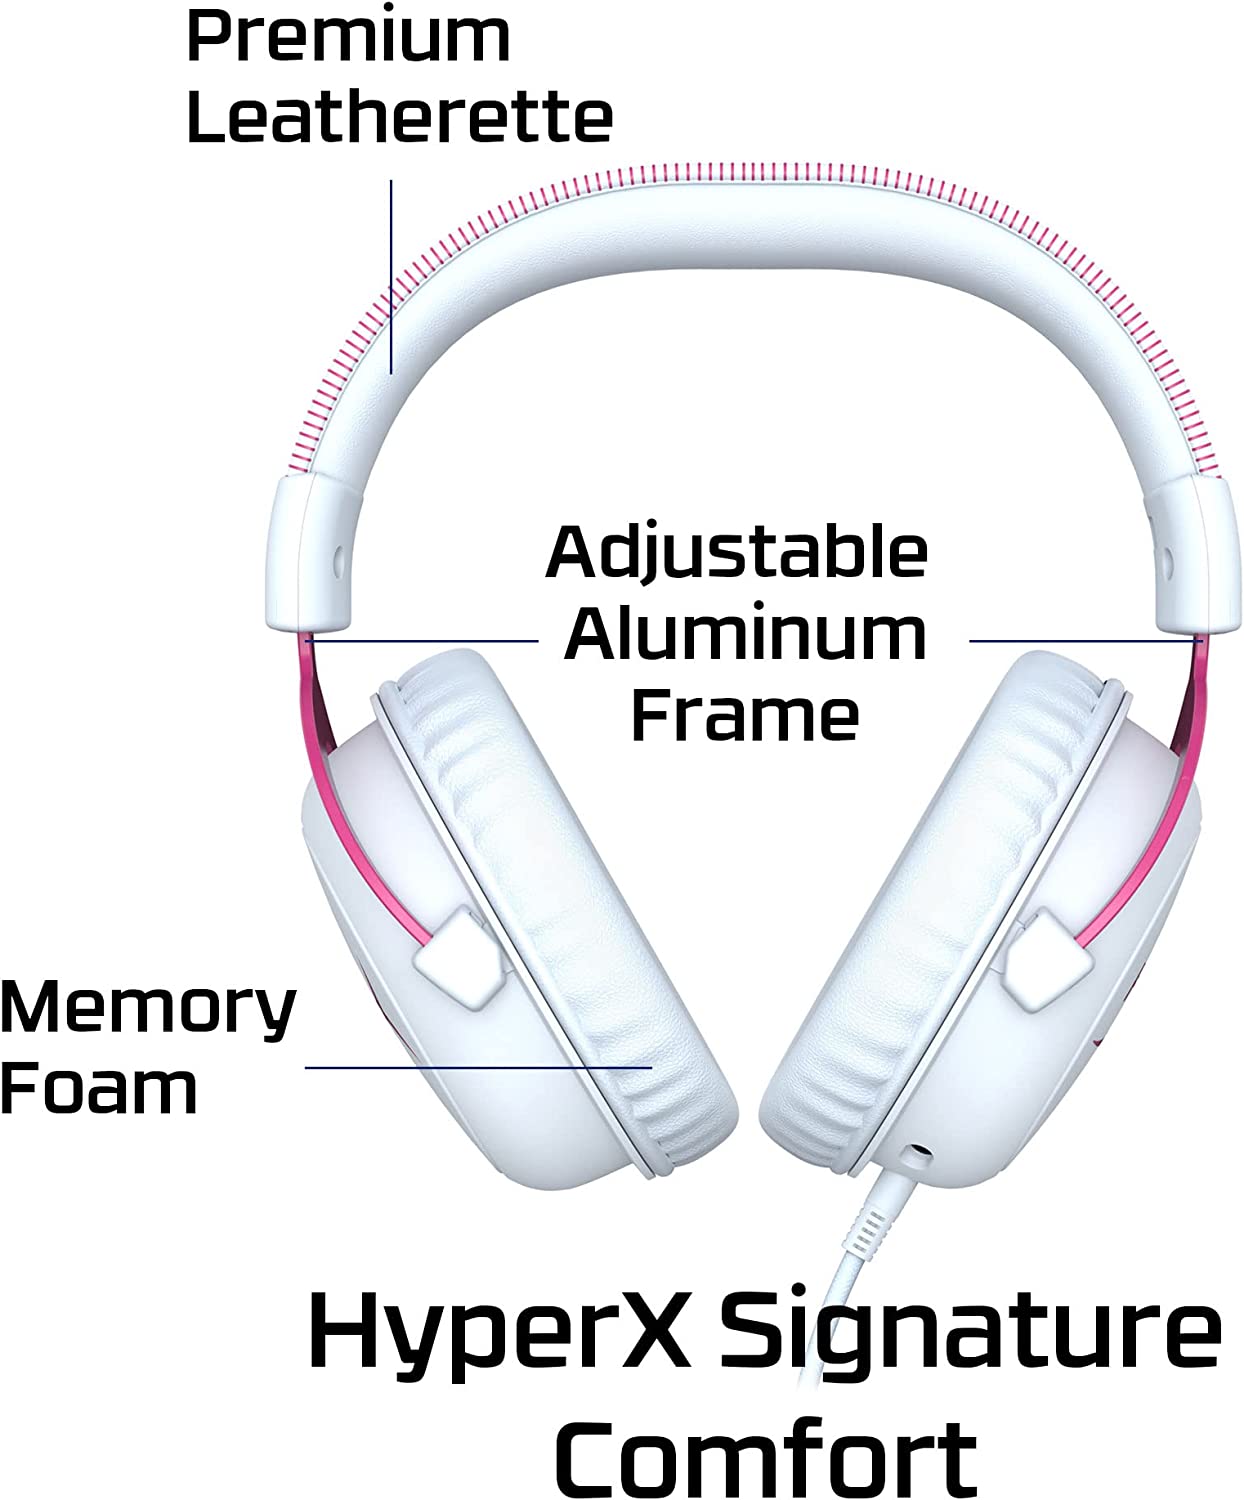 HyperX Cloud II Gaming Headset - 7.1 Surround Sound - Memory Foam Ear Pads  - Durable Aluminum Frame - Works